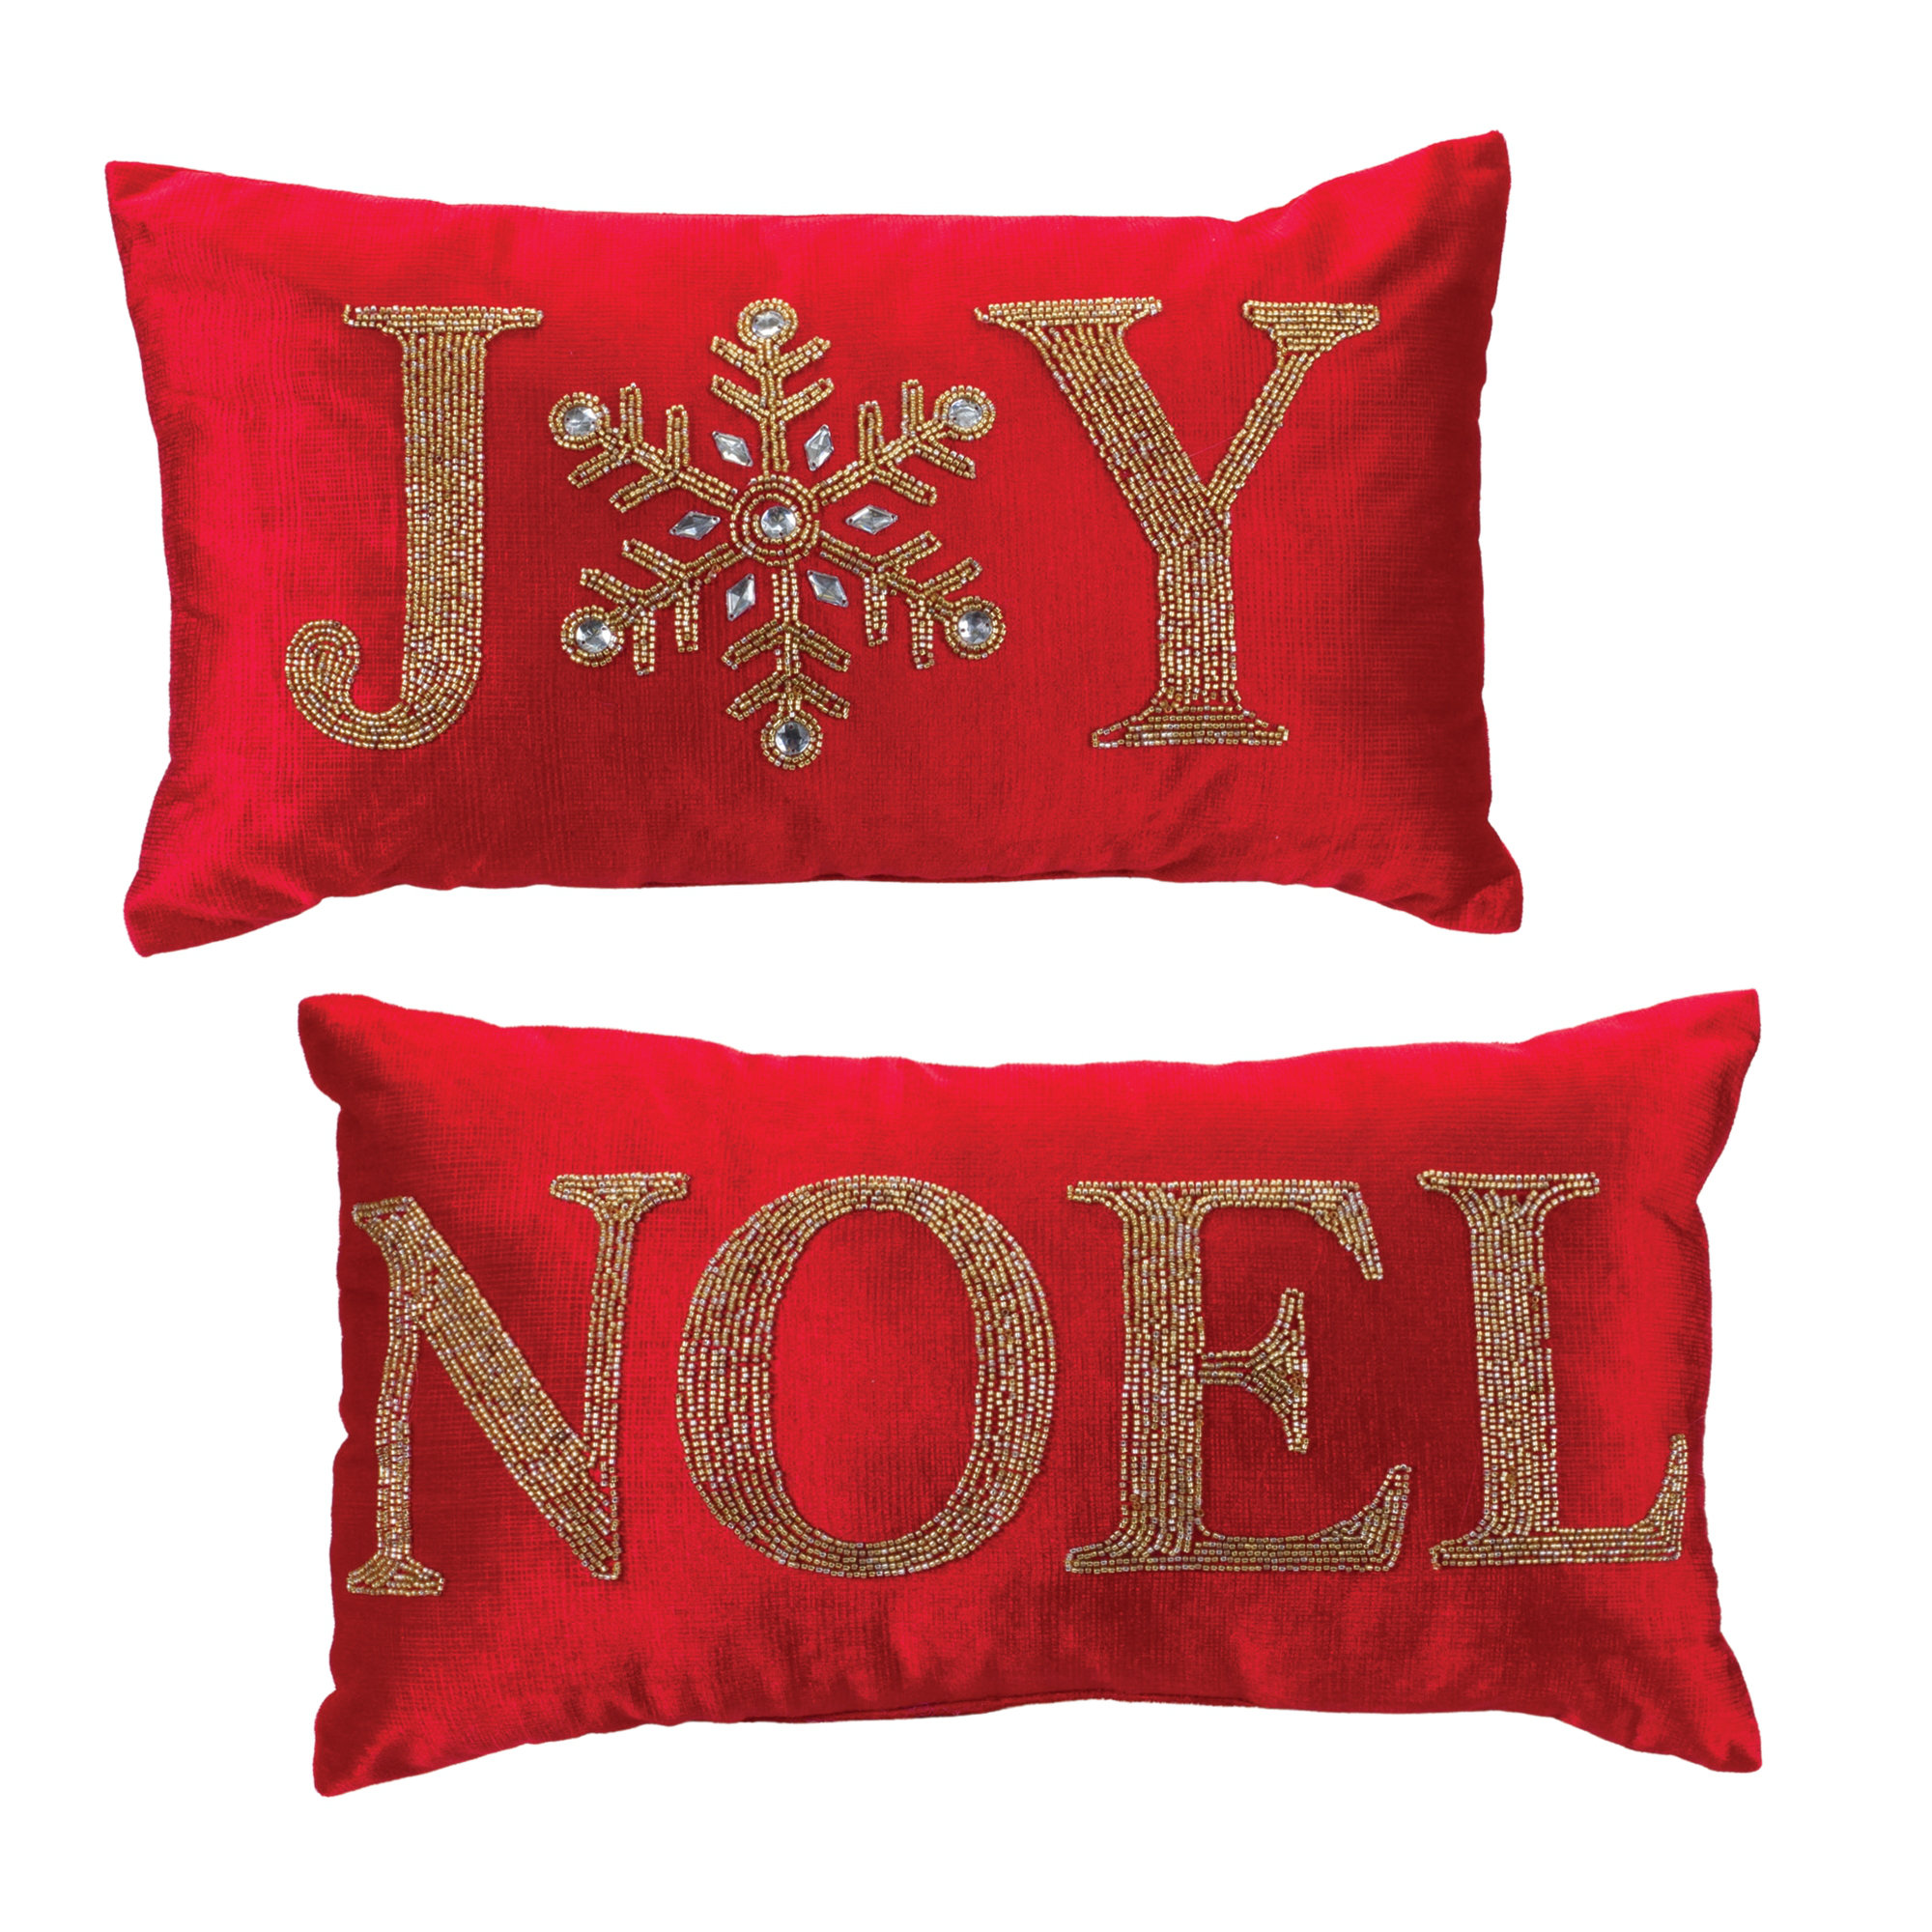 The Holiday Aisle® Polyester Throw Pillow | Wayfair